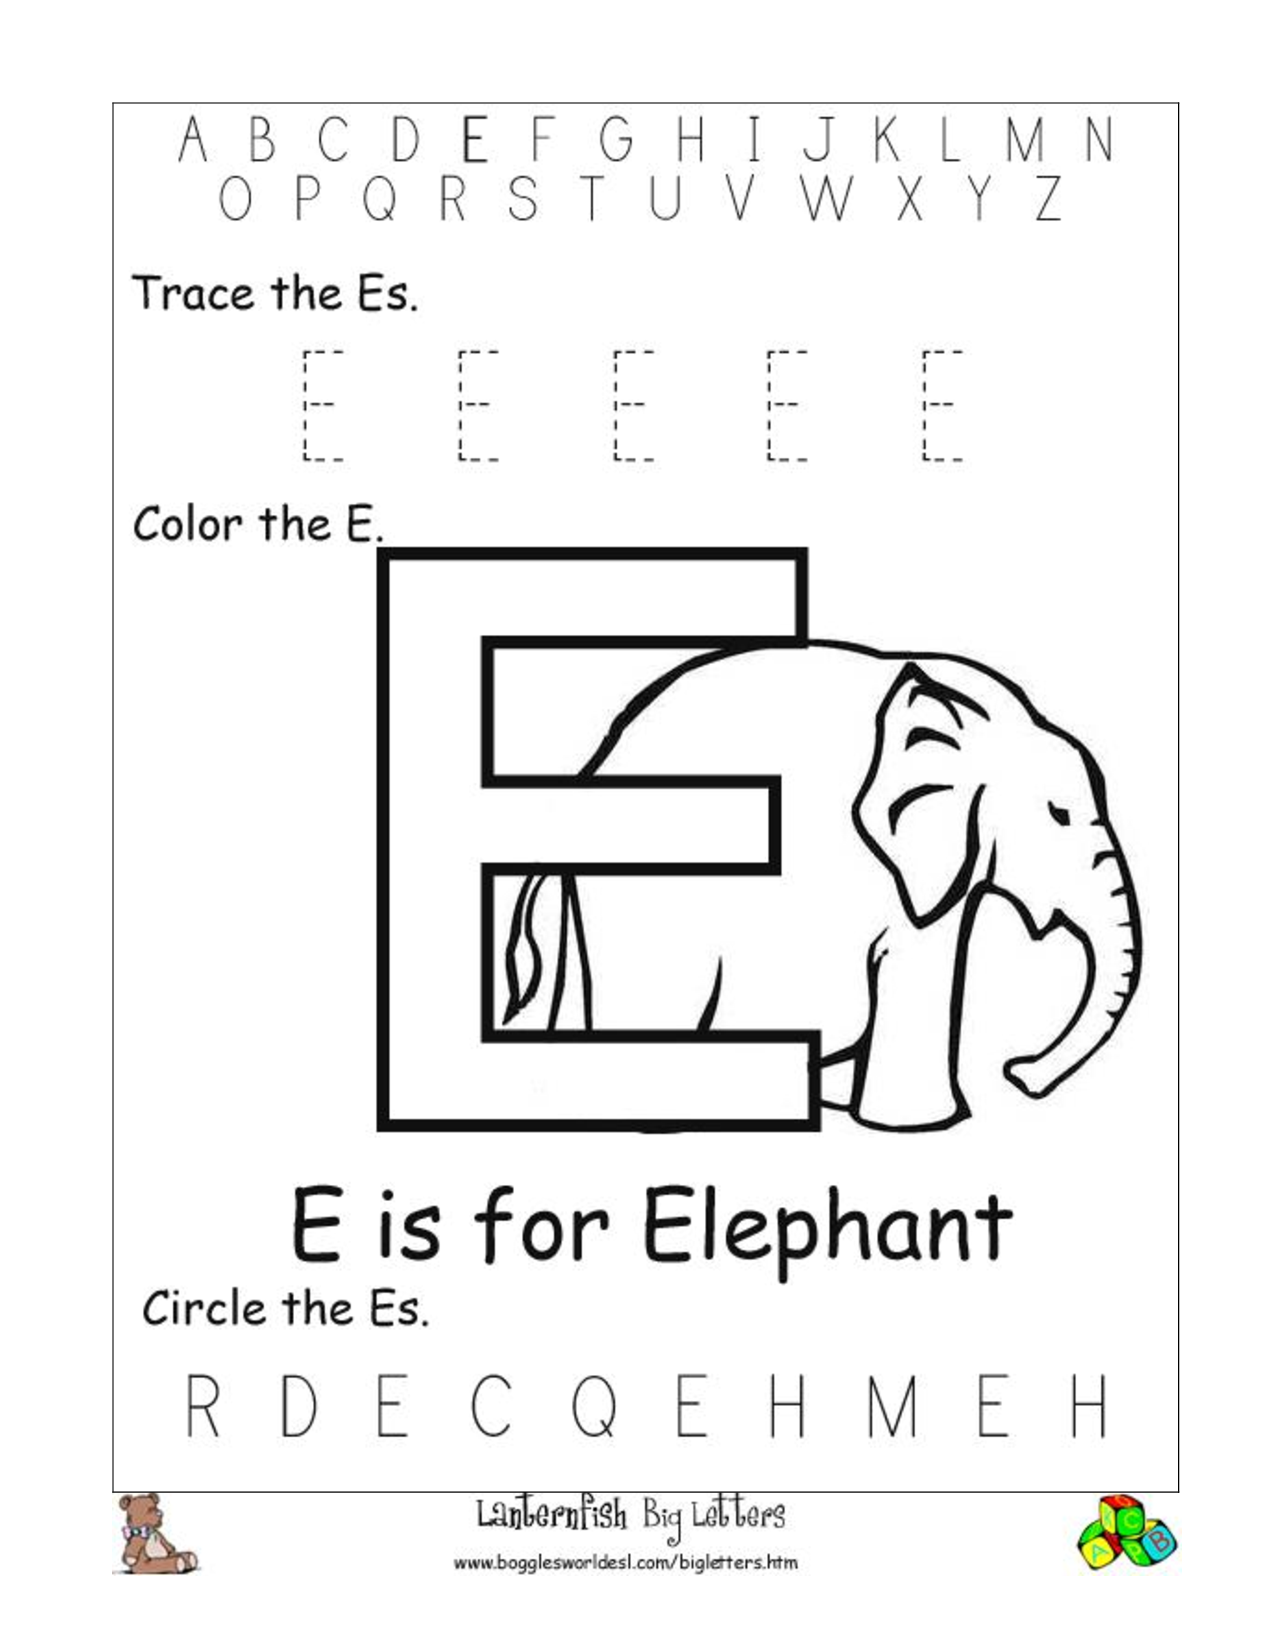 Alphabet Worksheet Category Page 4 - worksheeto.com